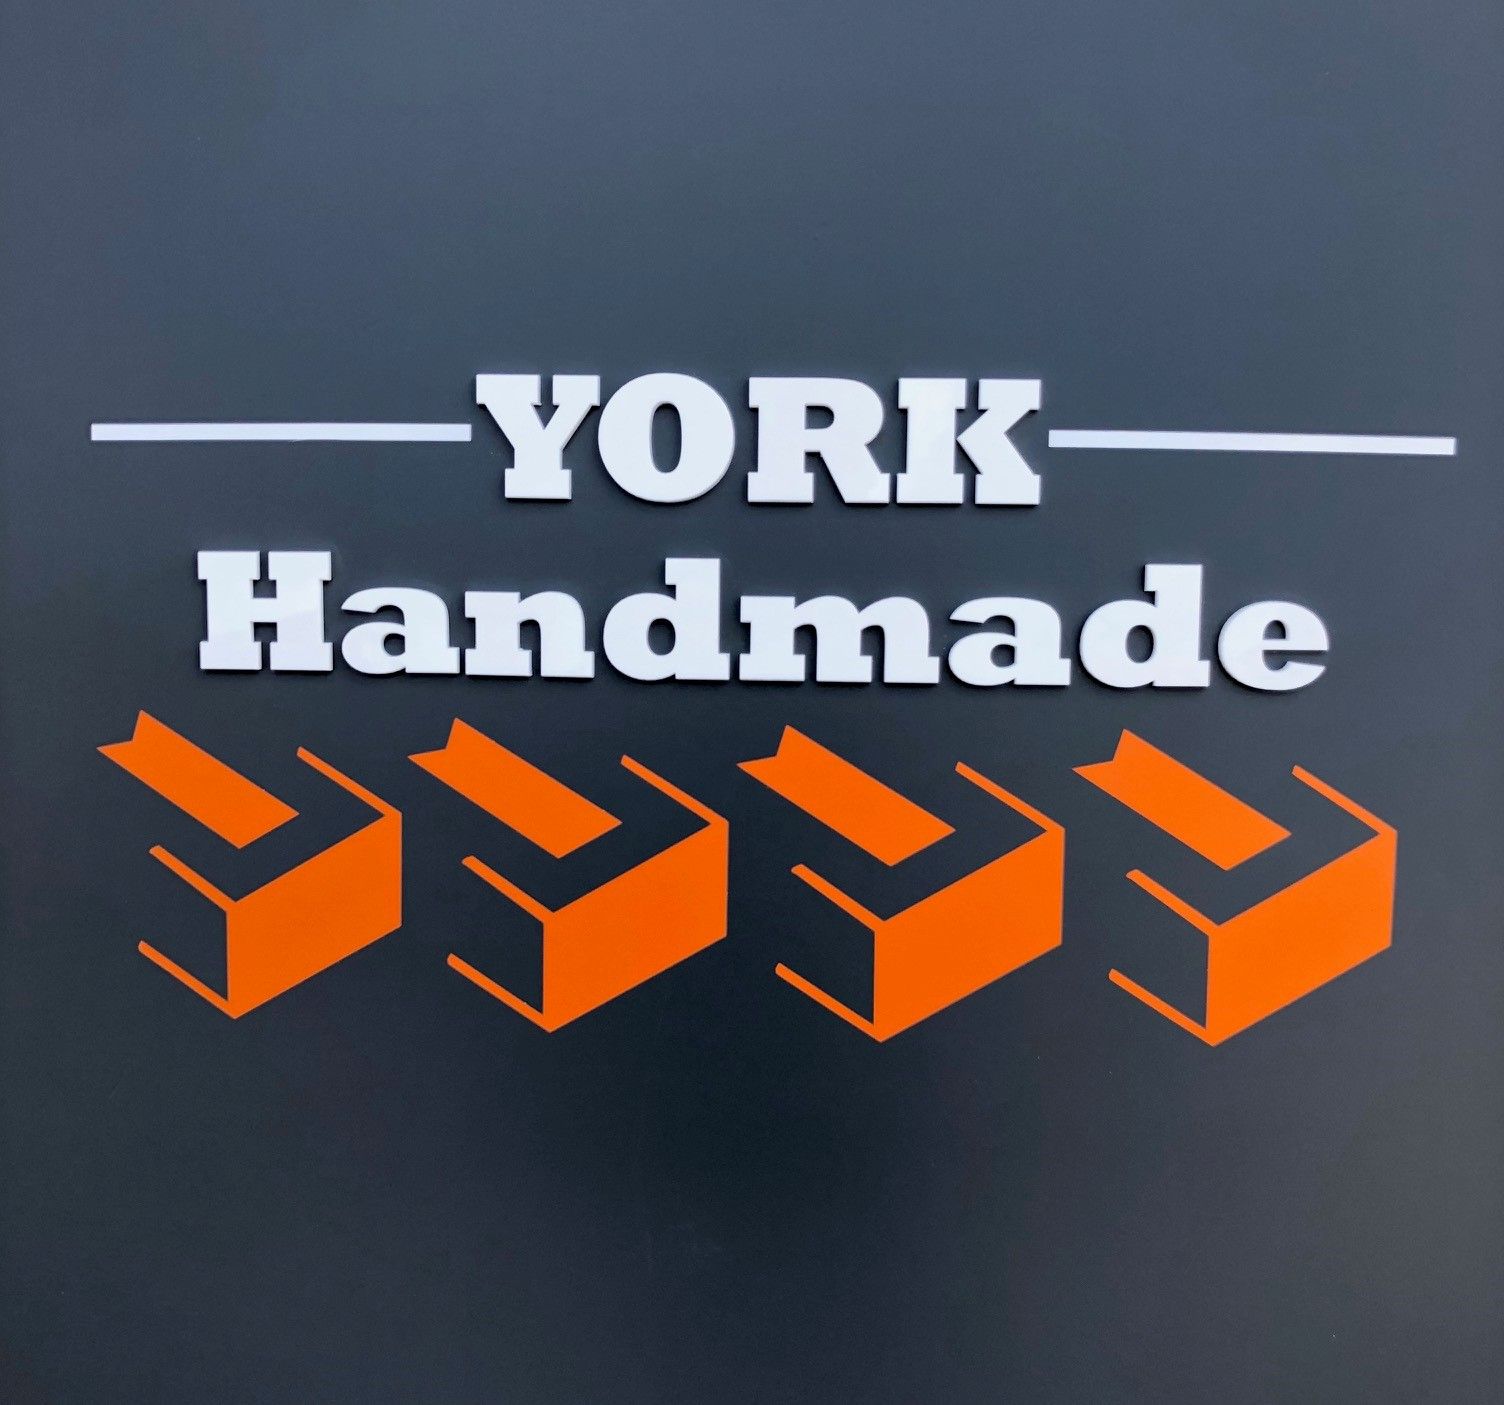 York Handmade Brick Company